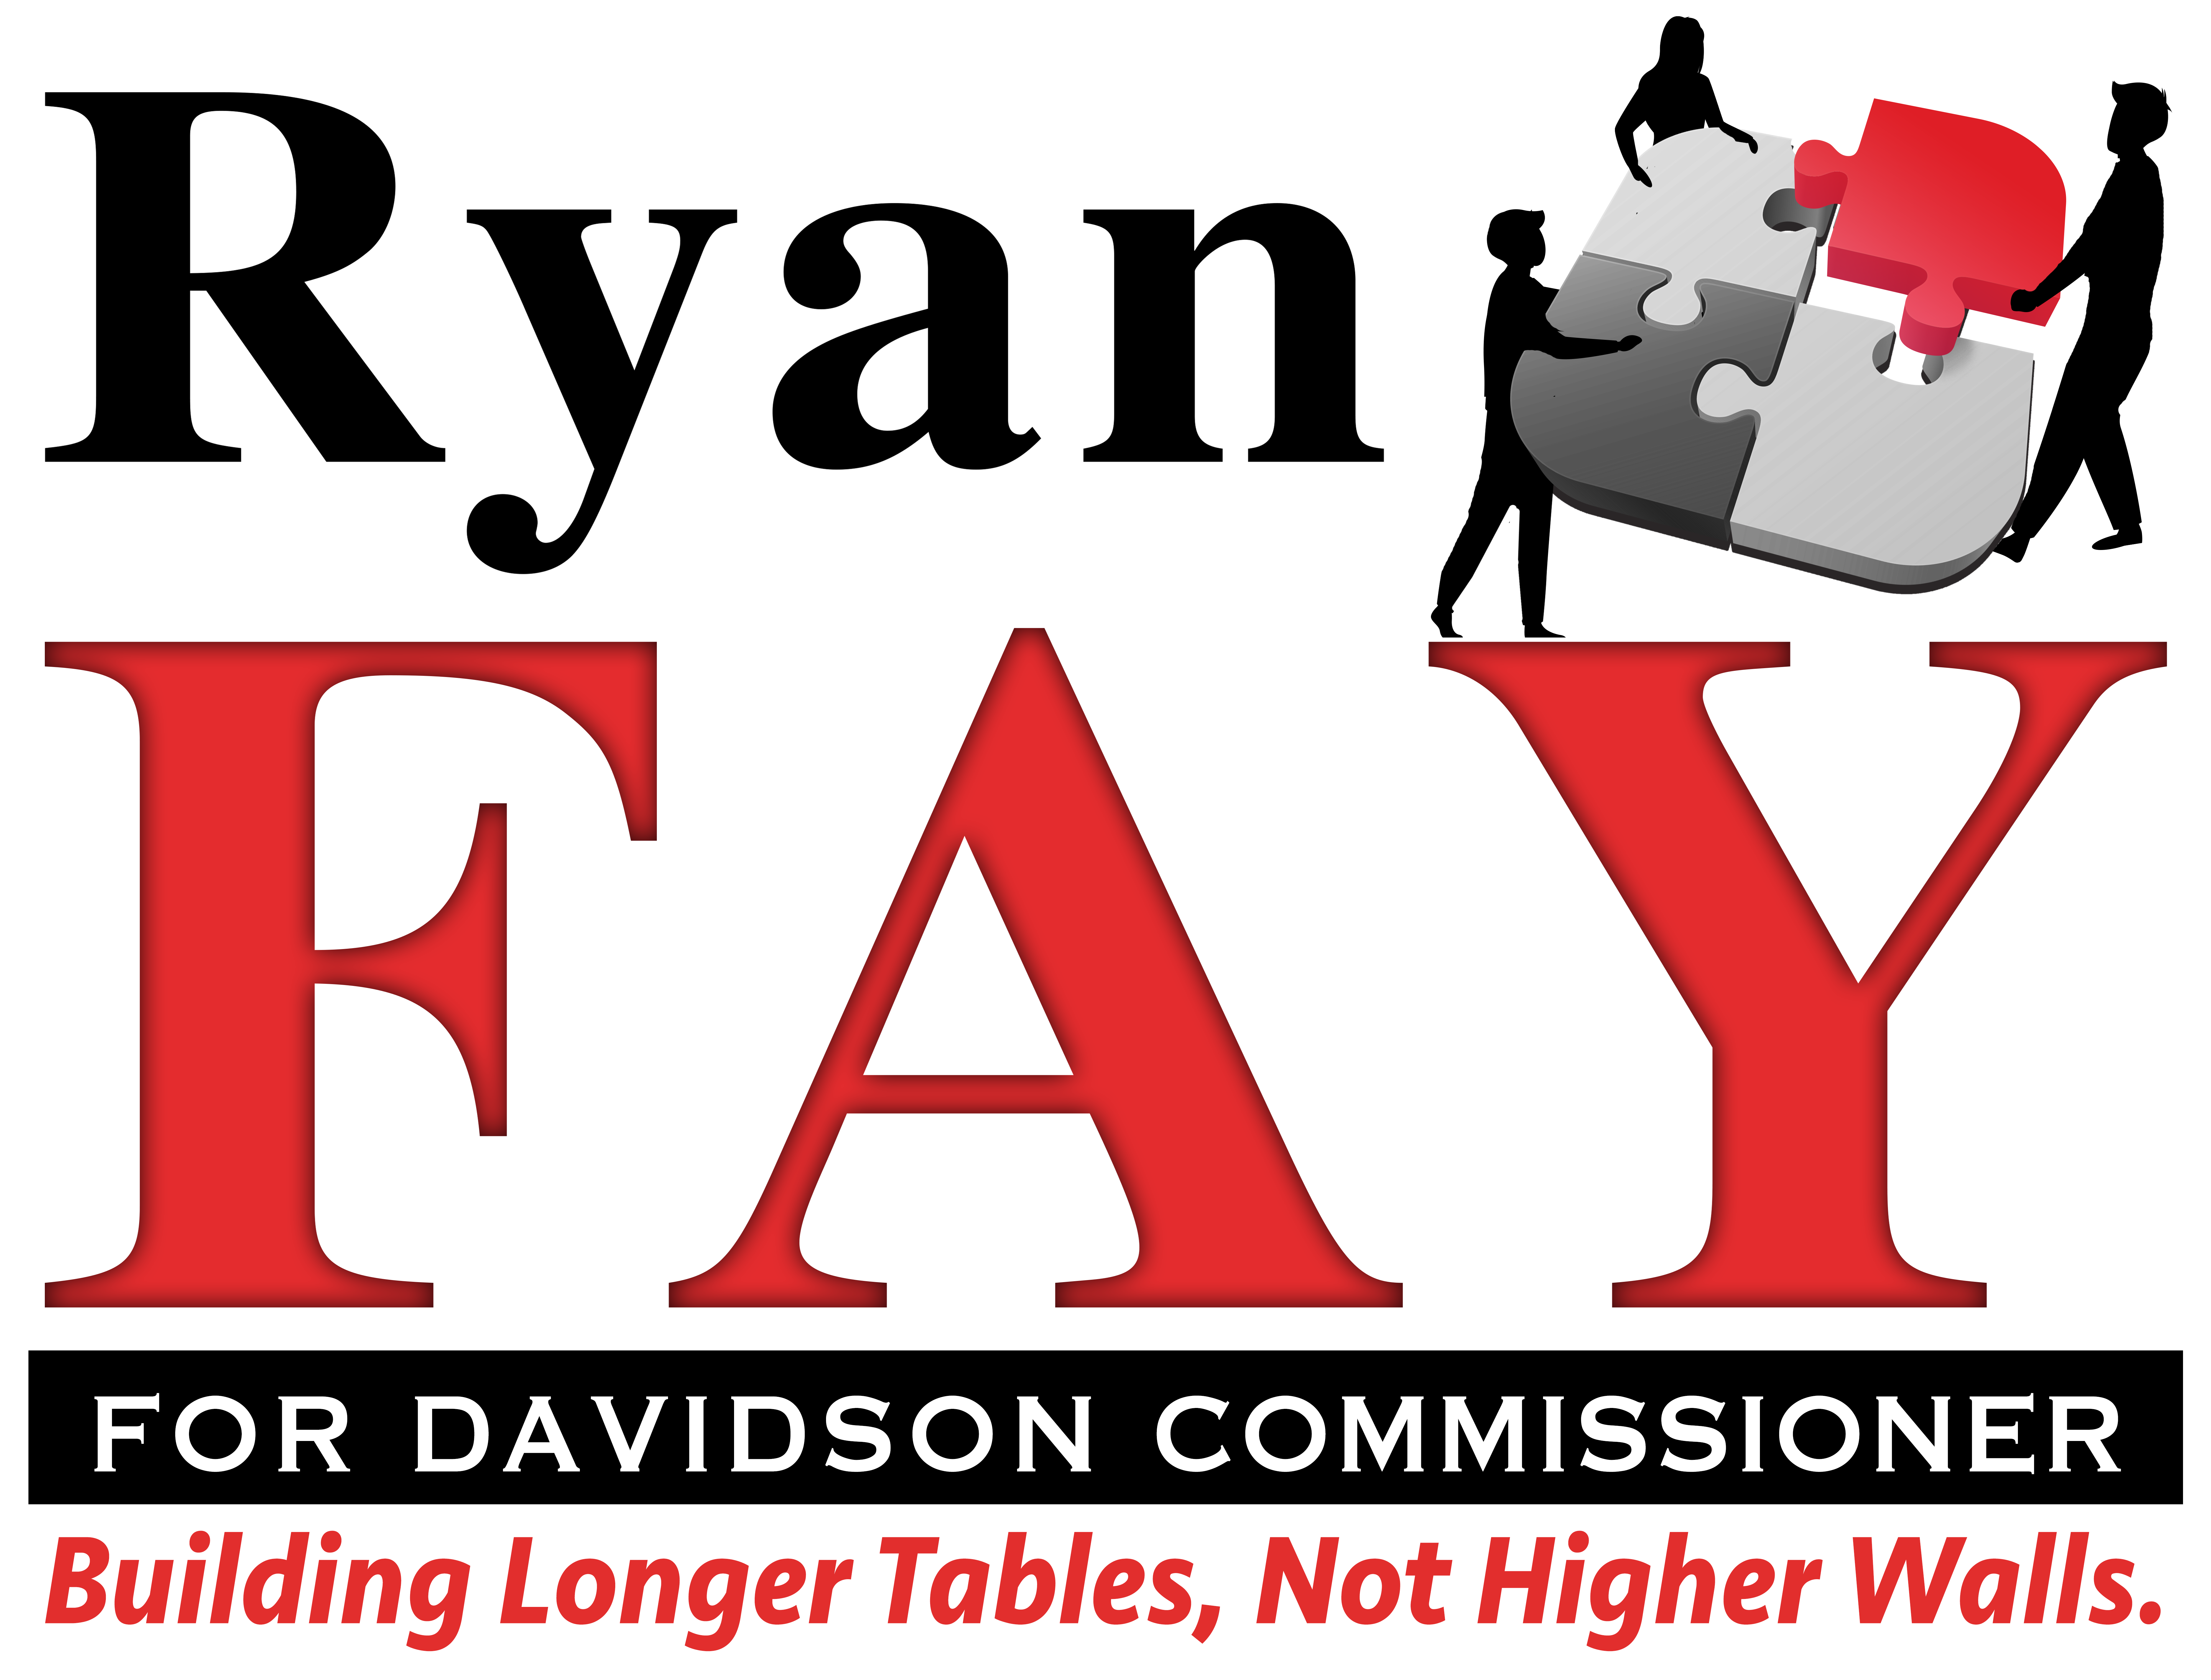 RYAN FAY for Davidson, NC Commissioner